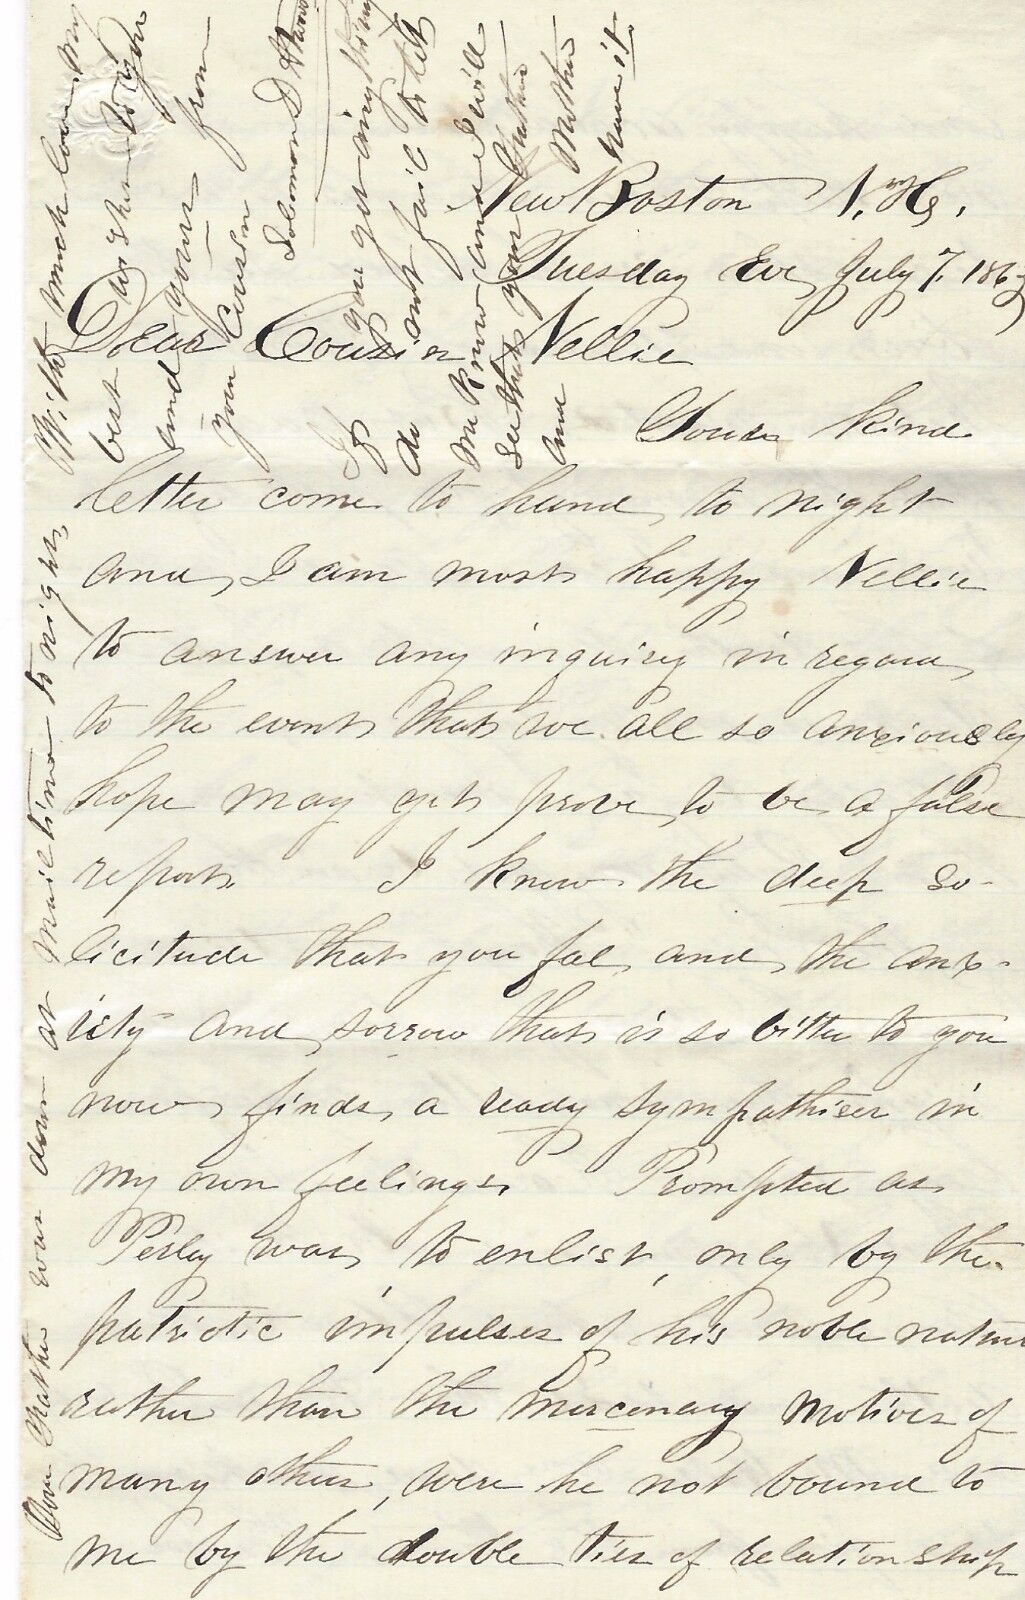 Civil War Letter: Postmaster Details Local Dead, Glorious Gettysburg, Vicksburg